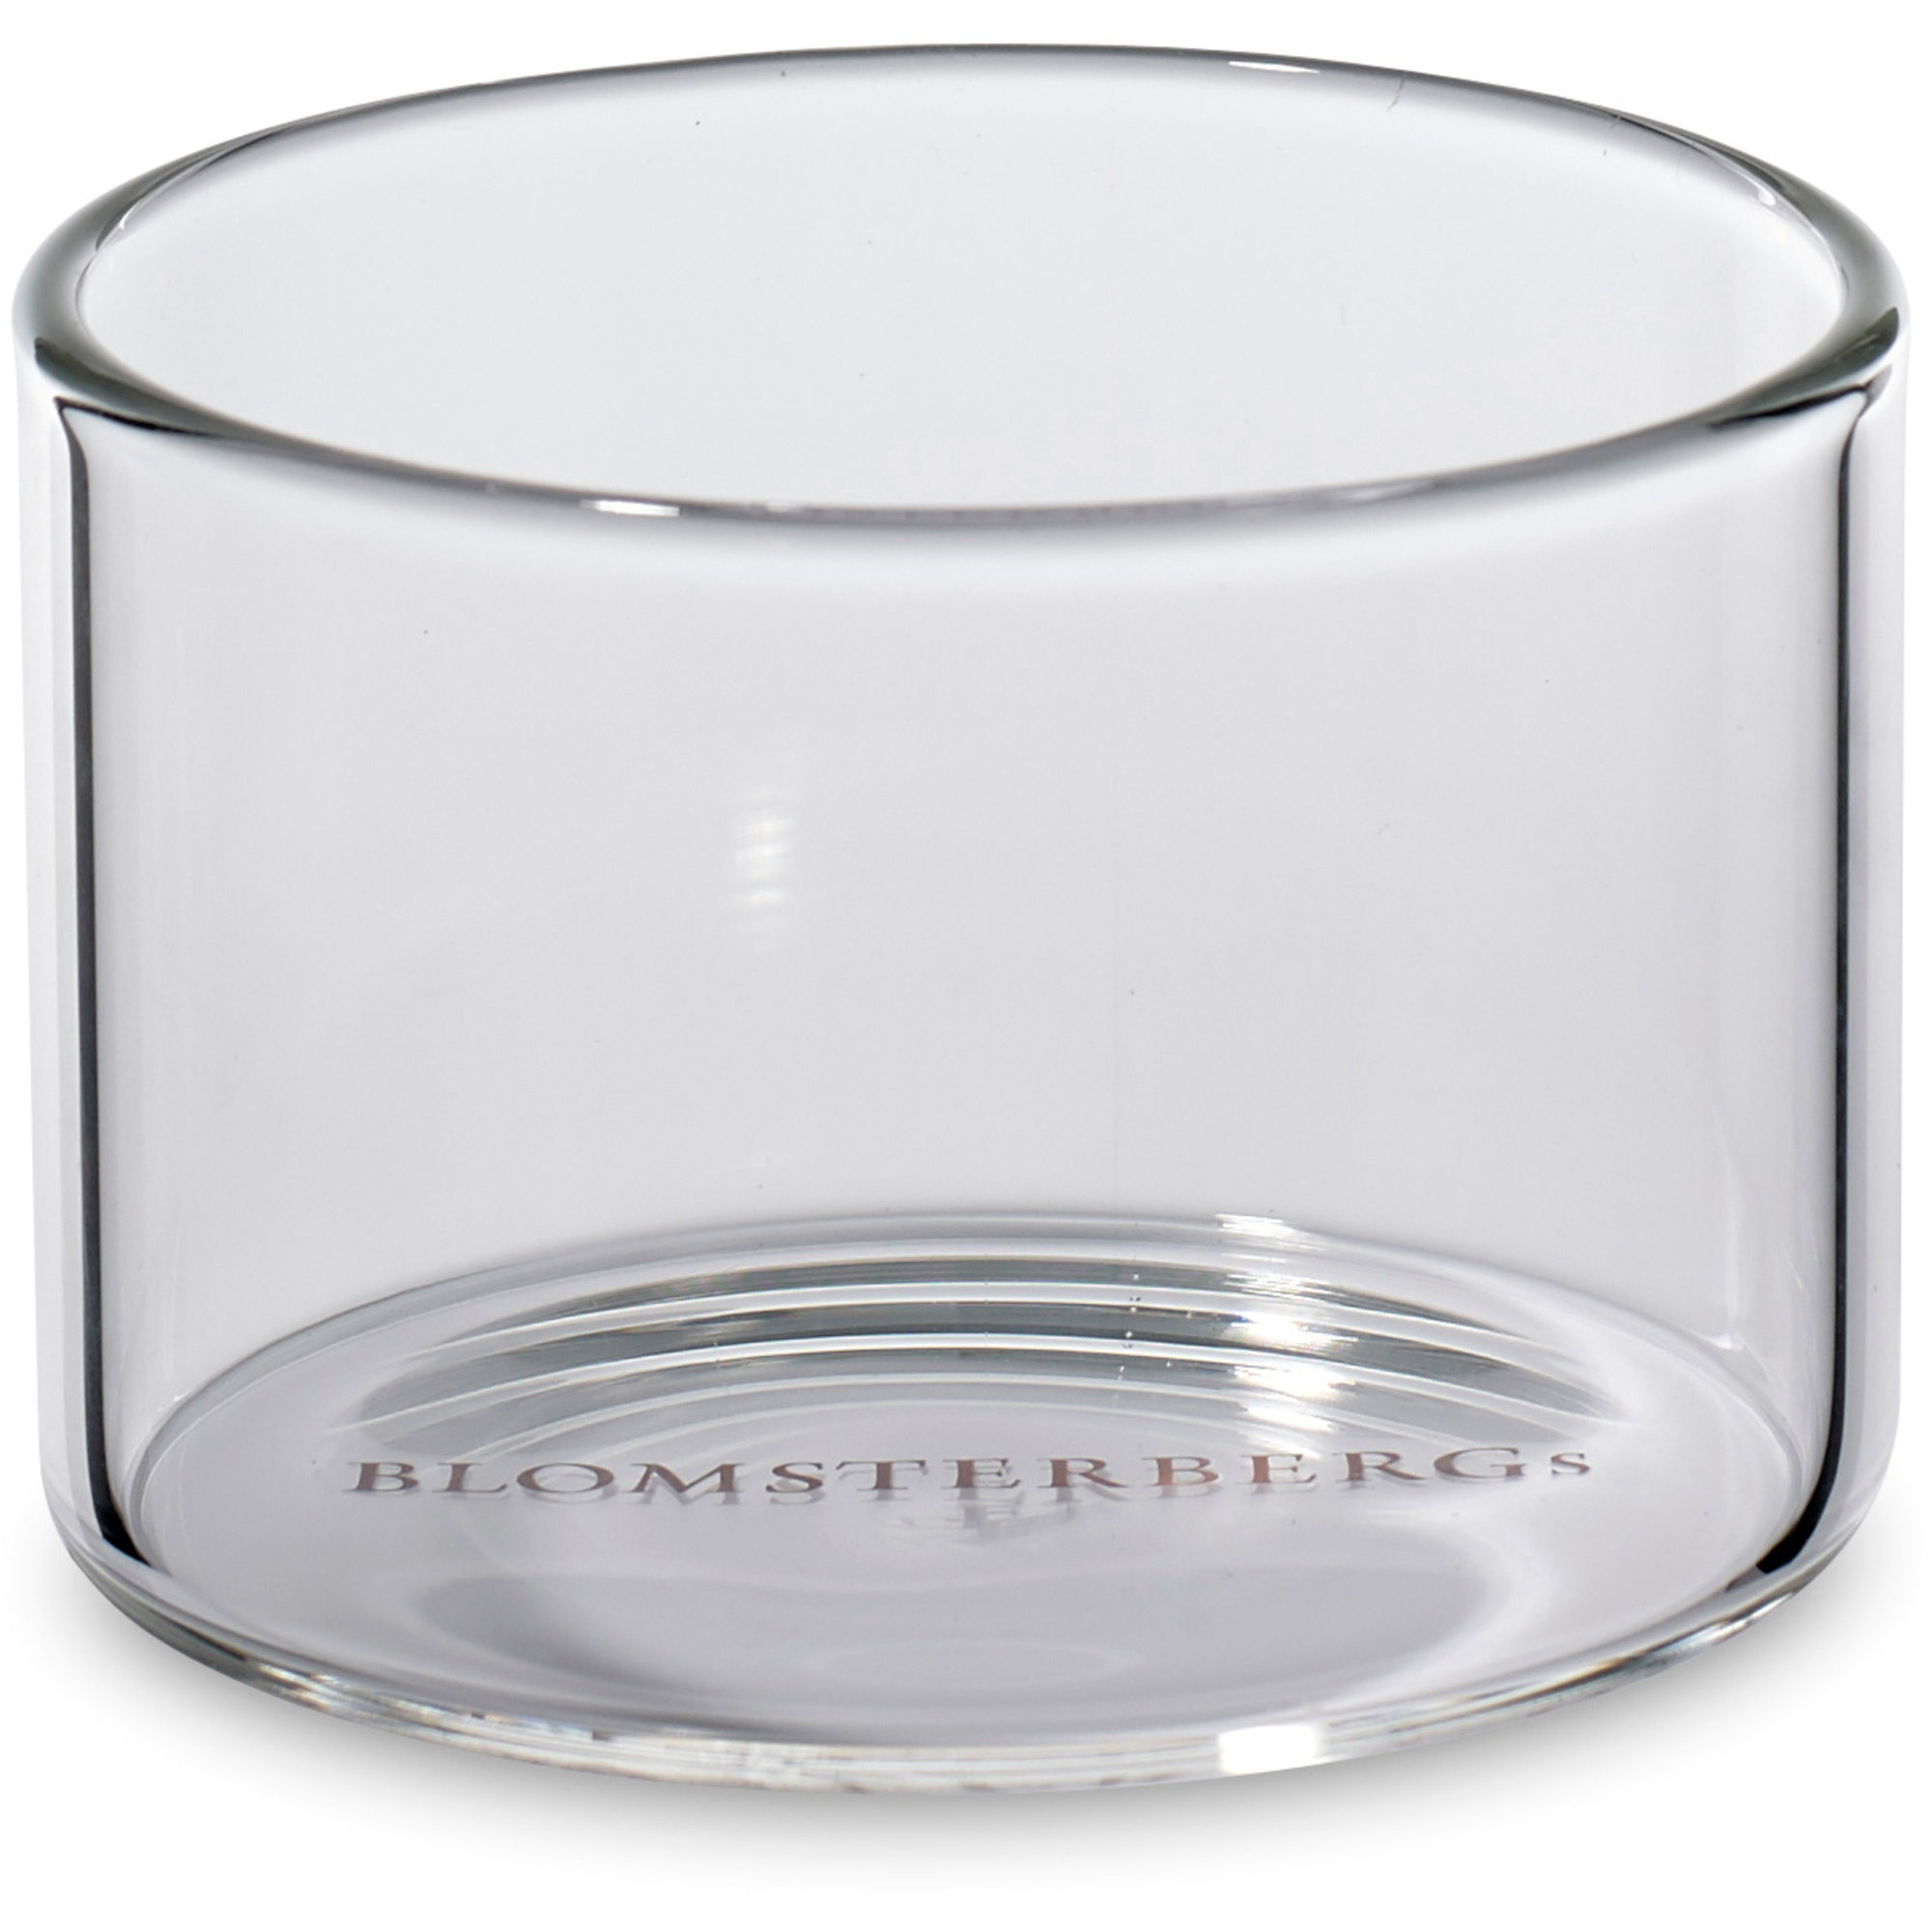 Blomsterbergs Serveringsglas 6 cm 4 stk